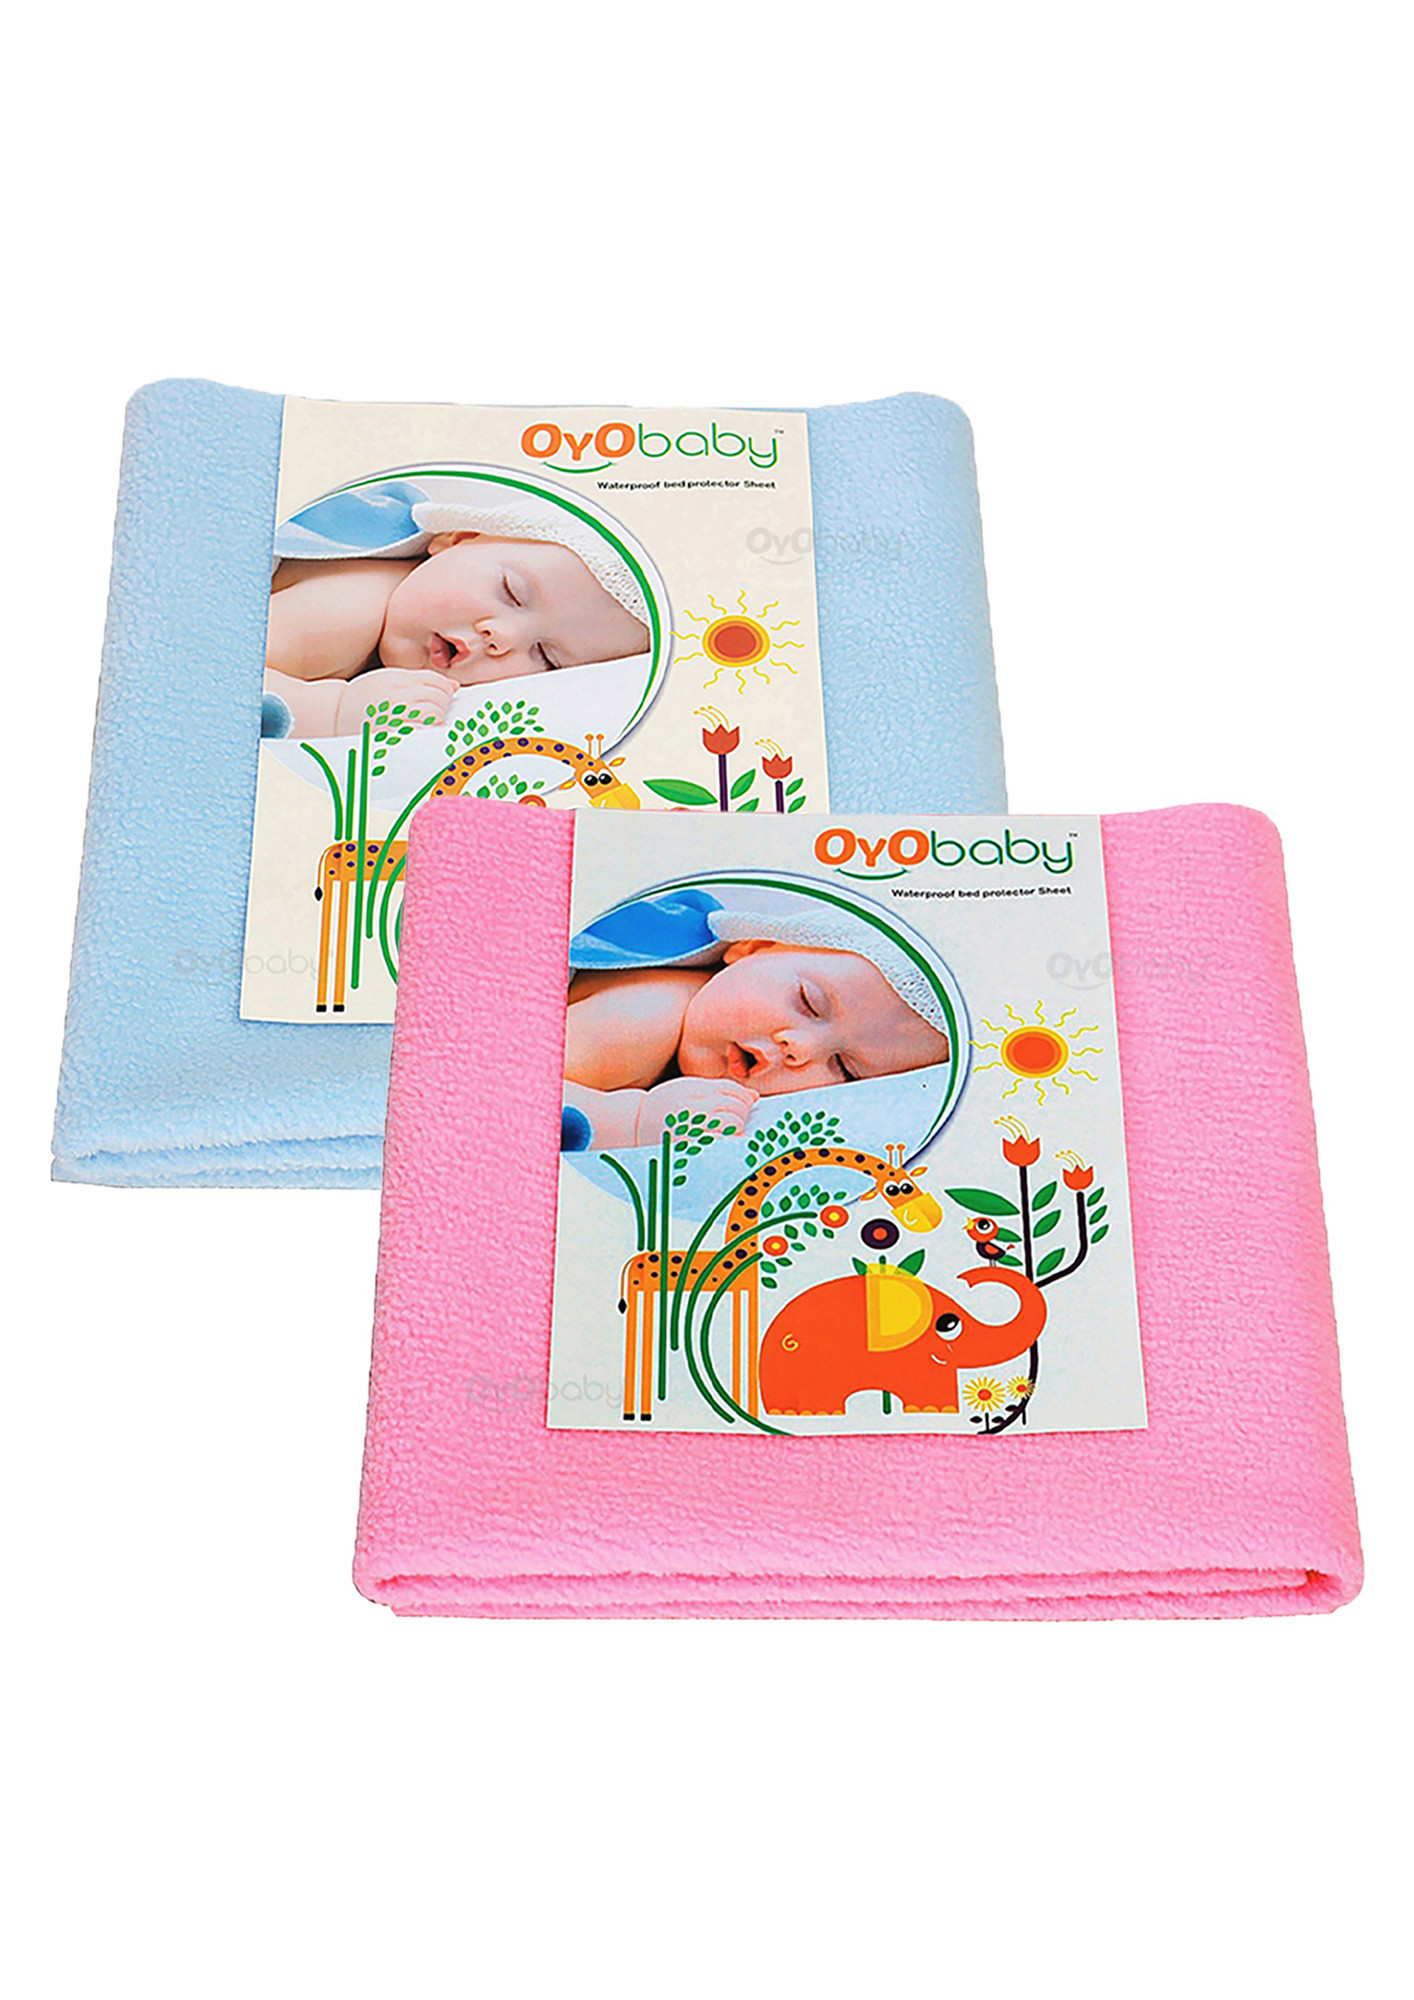 Oyo Baby Baby Bed Protector Sheet, Baby Waterproof Sheet, Baby Dry Sheet Pack Of 2 (Pink, Blue)-OB-2009-P+B